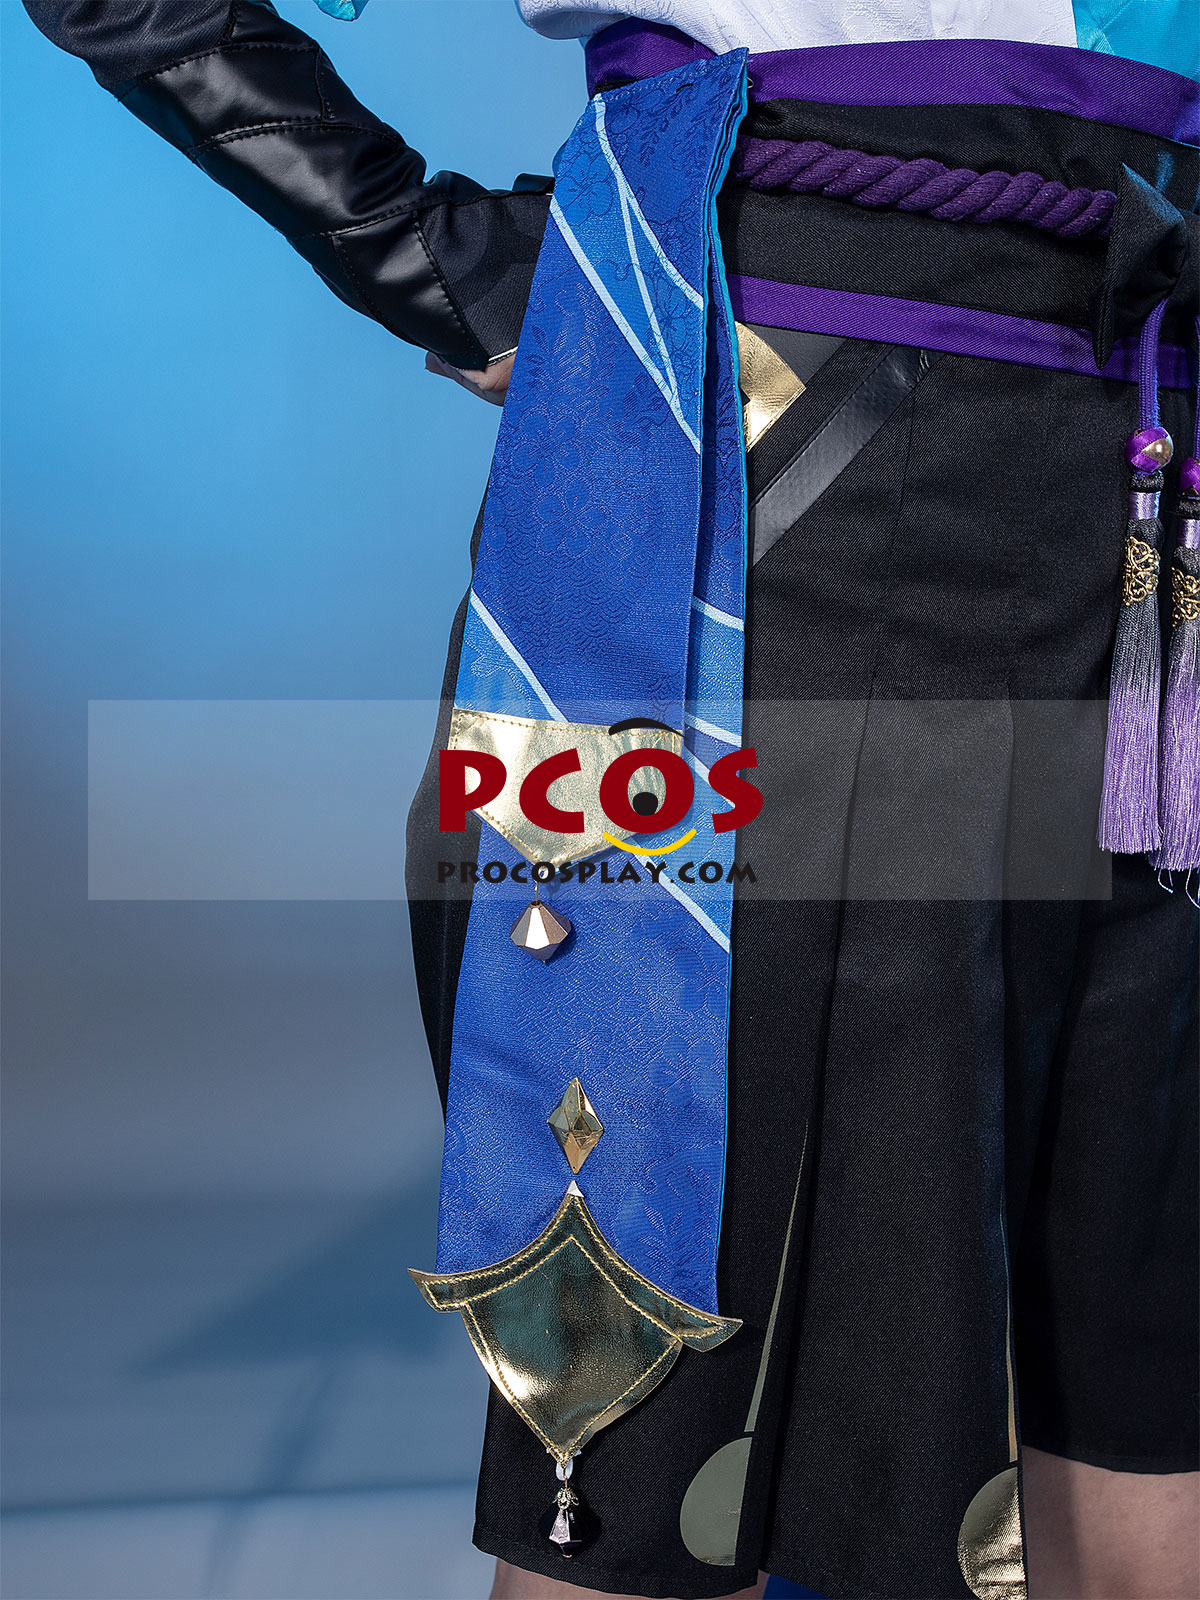 Genshin Impact Wanderer Cosplay Costume from Procosplay - Best ...